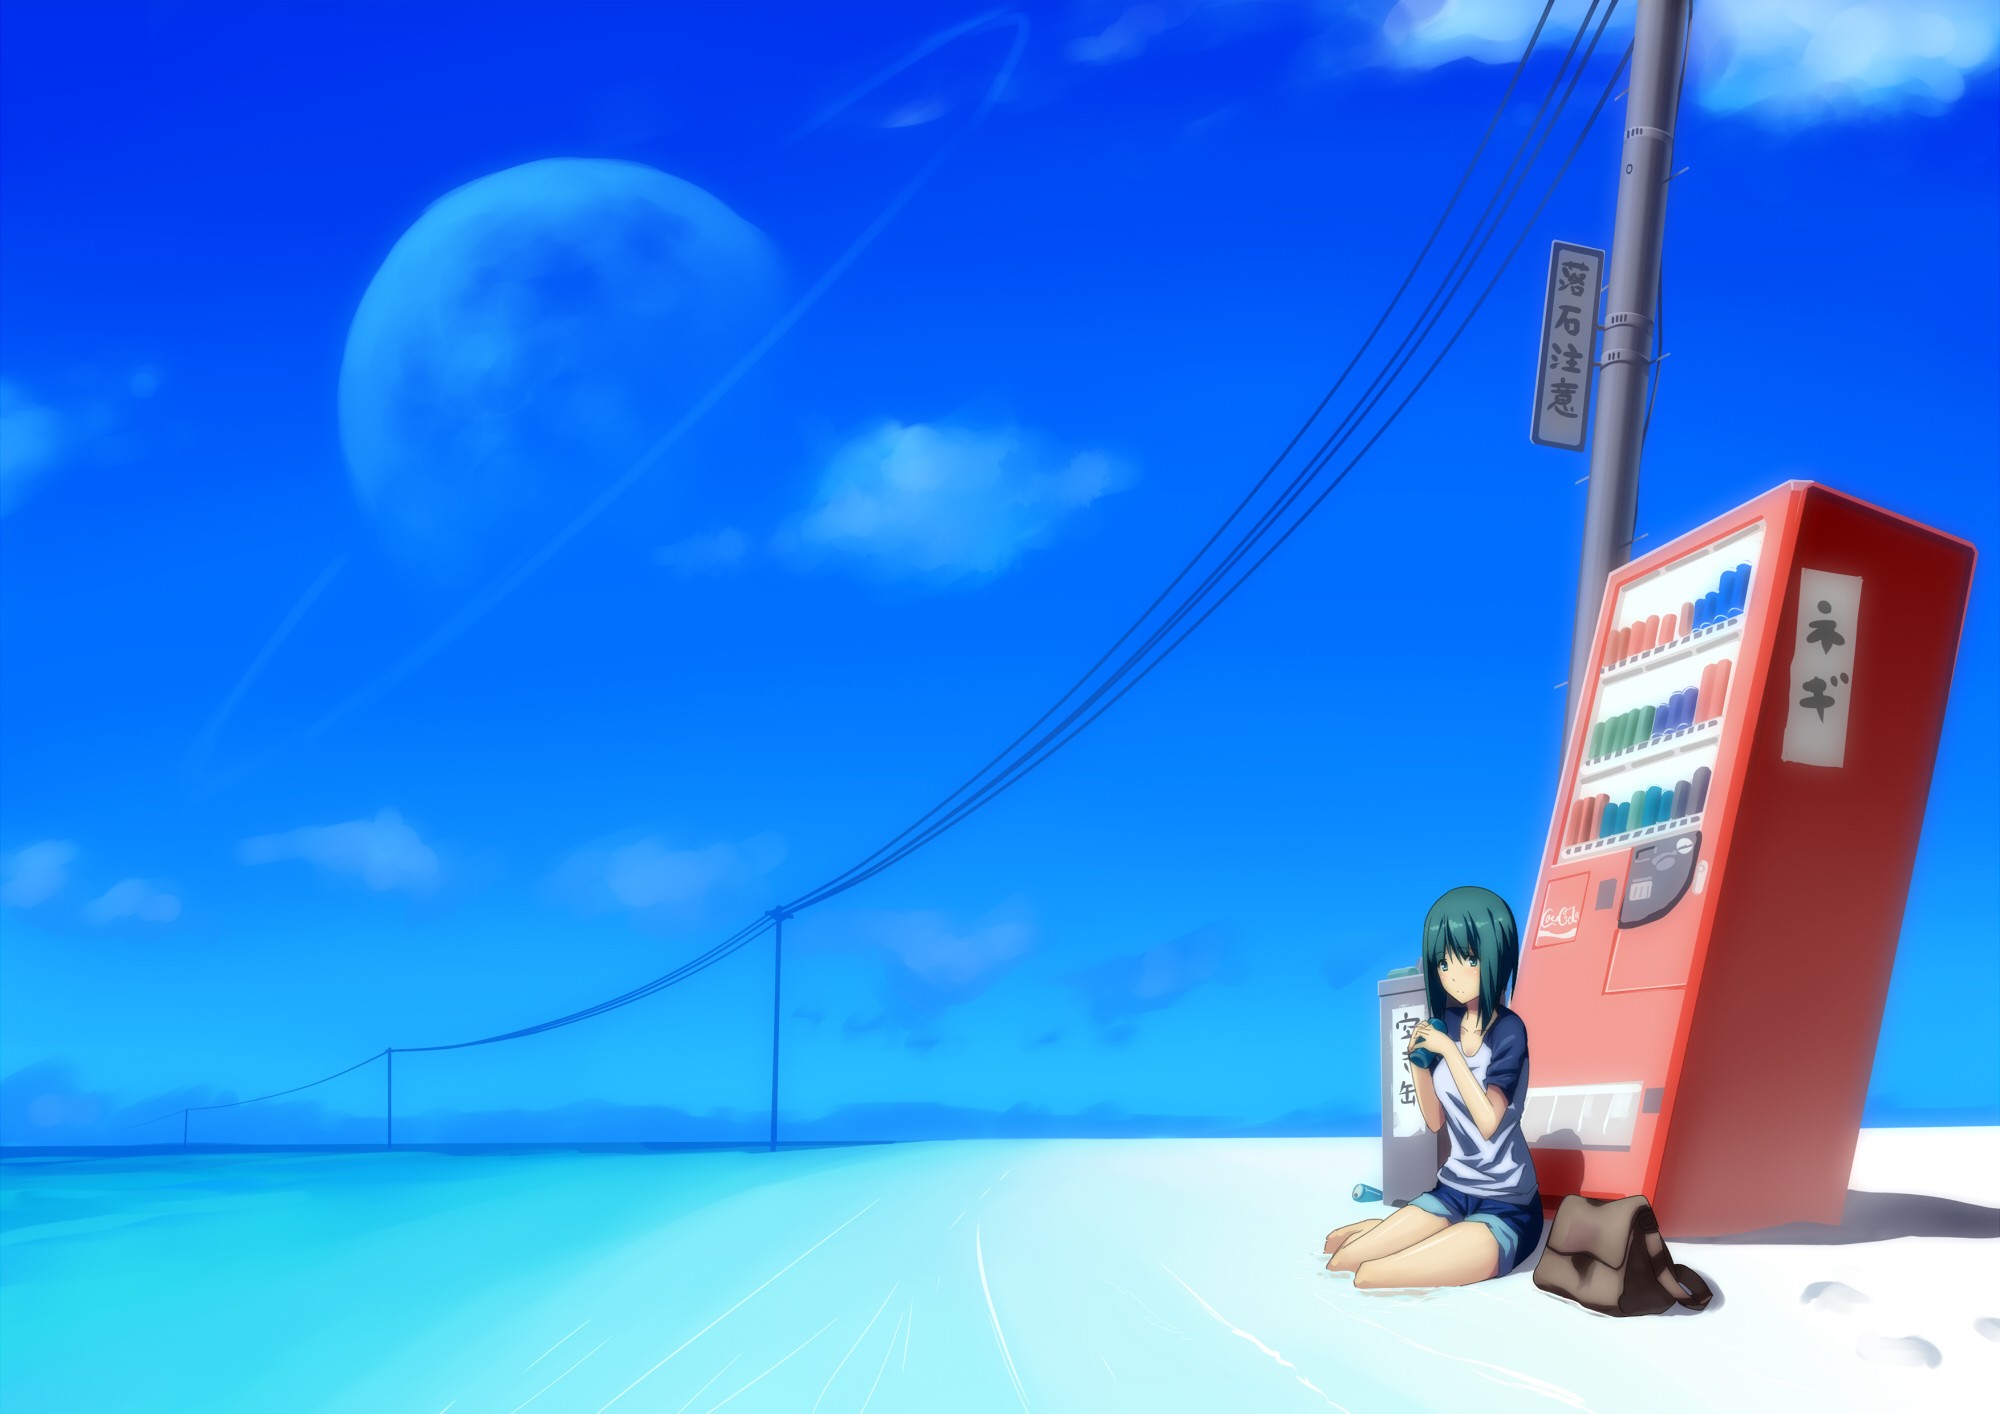 Wallpaper, anime girls, planet, sky, blue, wind, planetary rings, sailing, vending machine 2000x1414